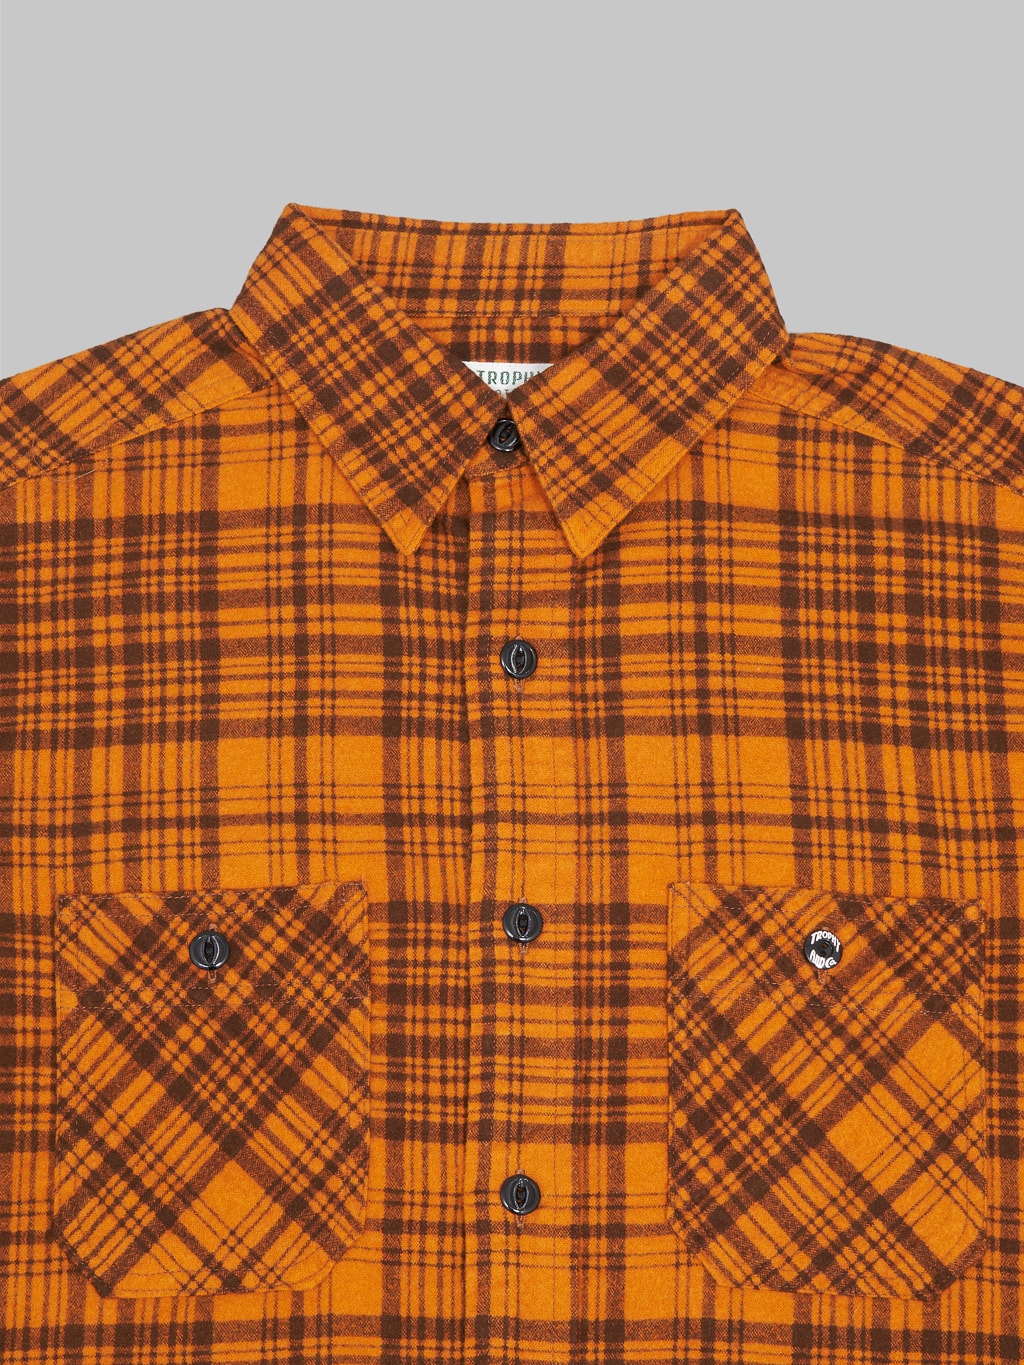 Trophy Clothing Machine Signal Check Shirt Orange chest